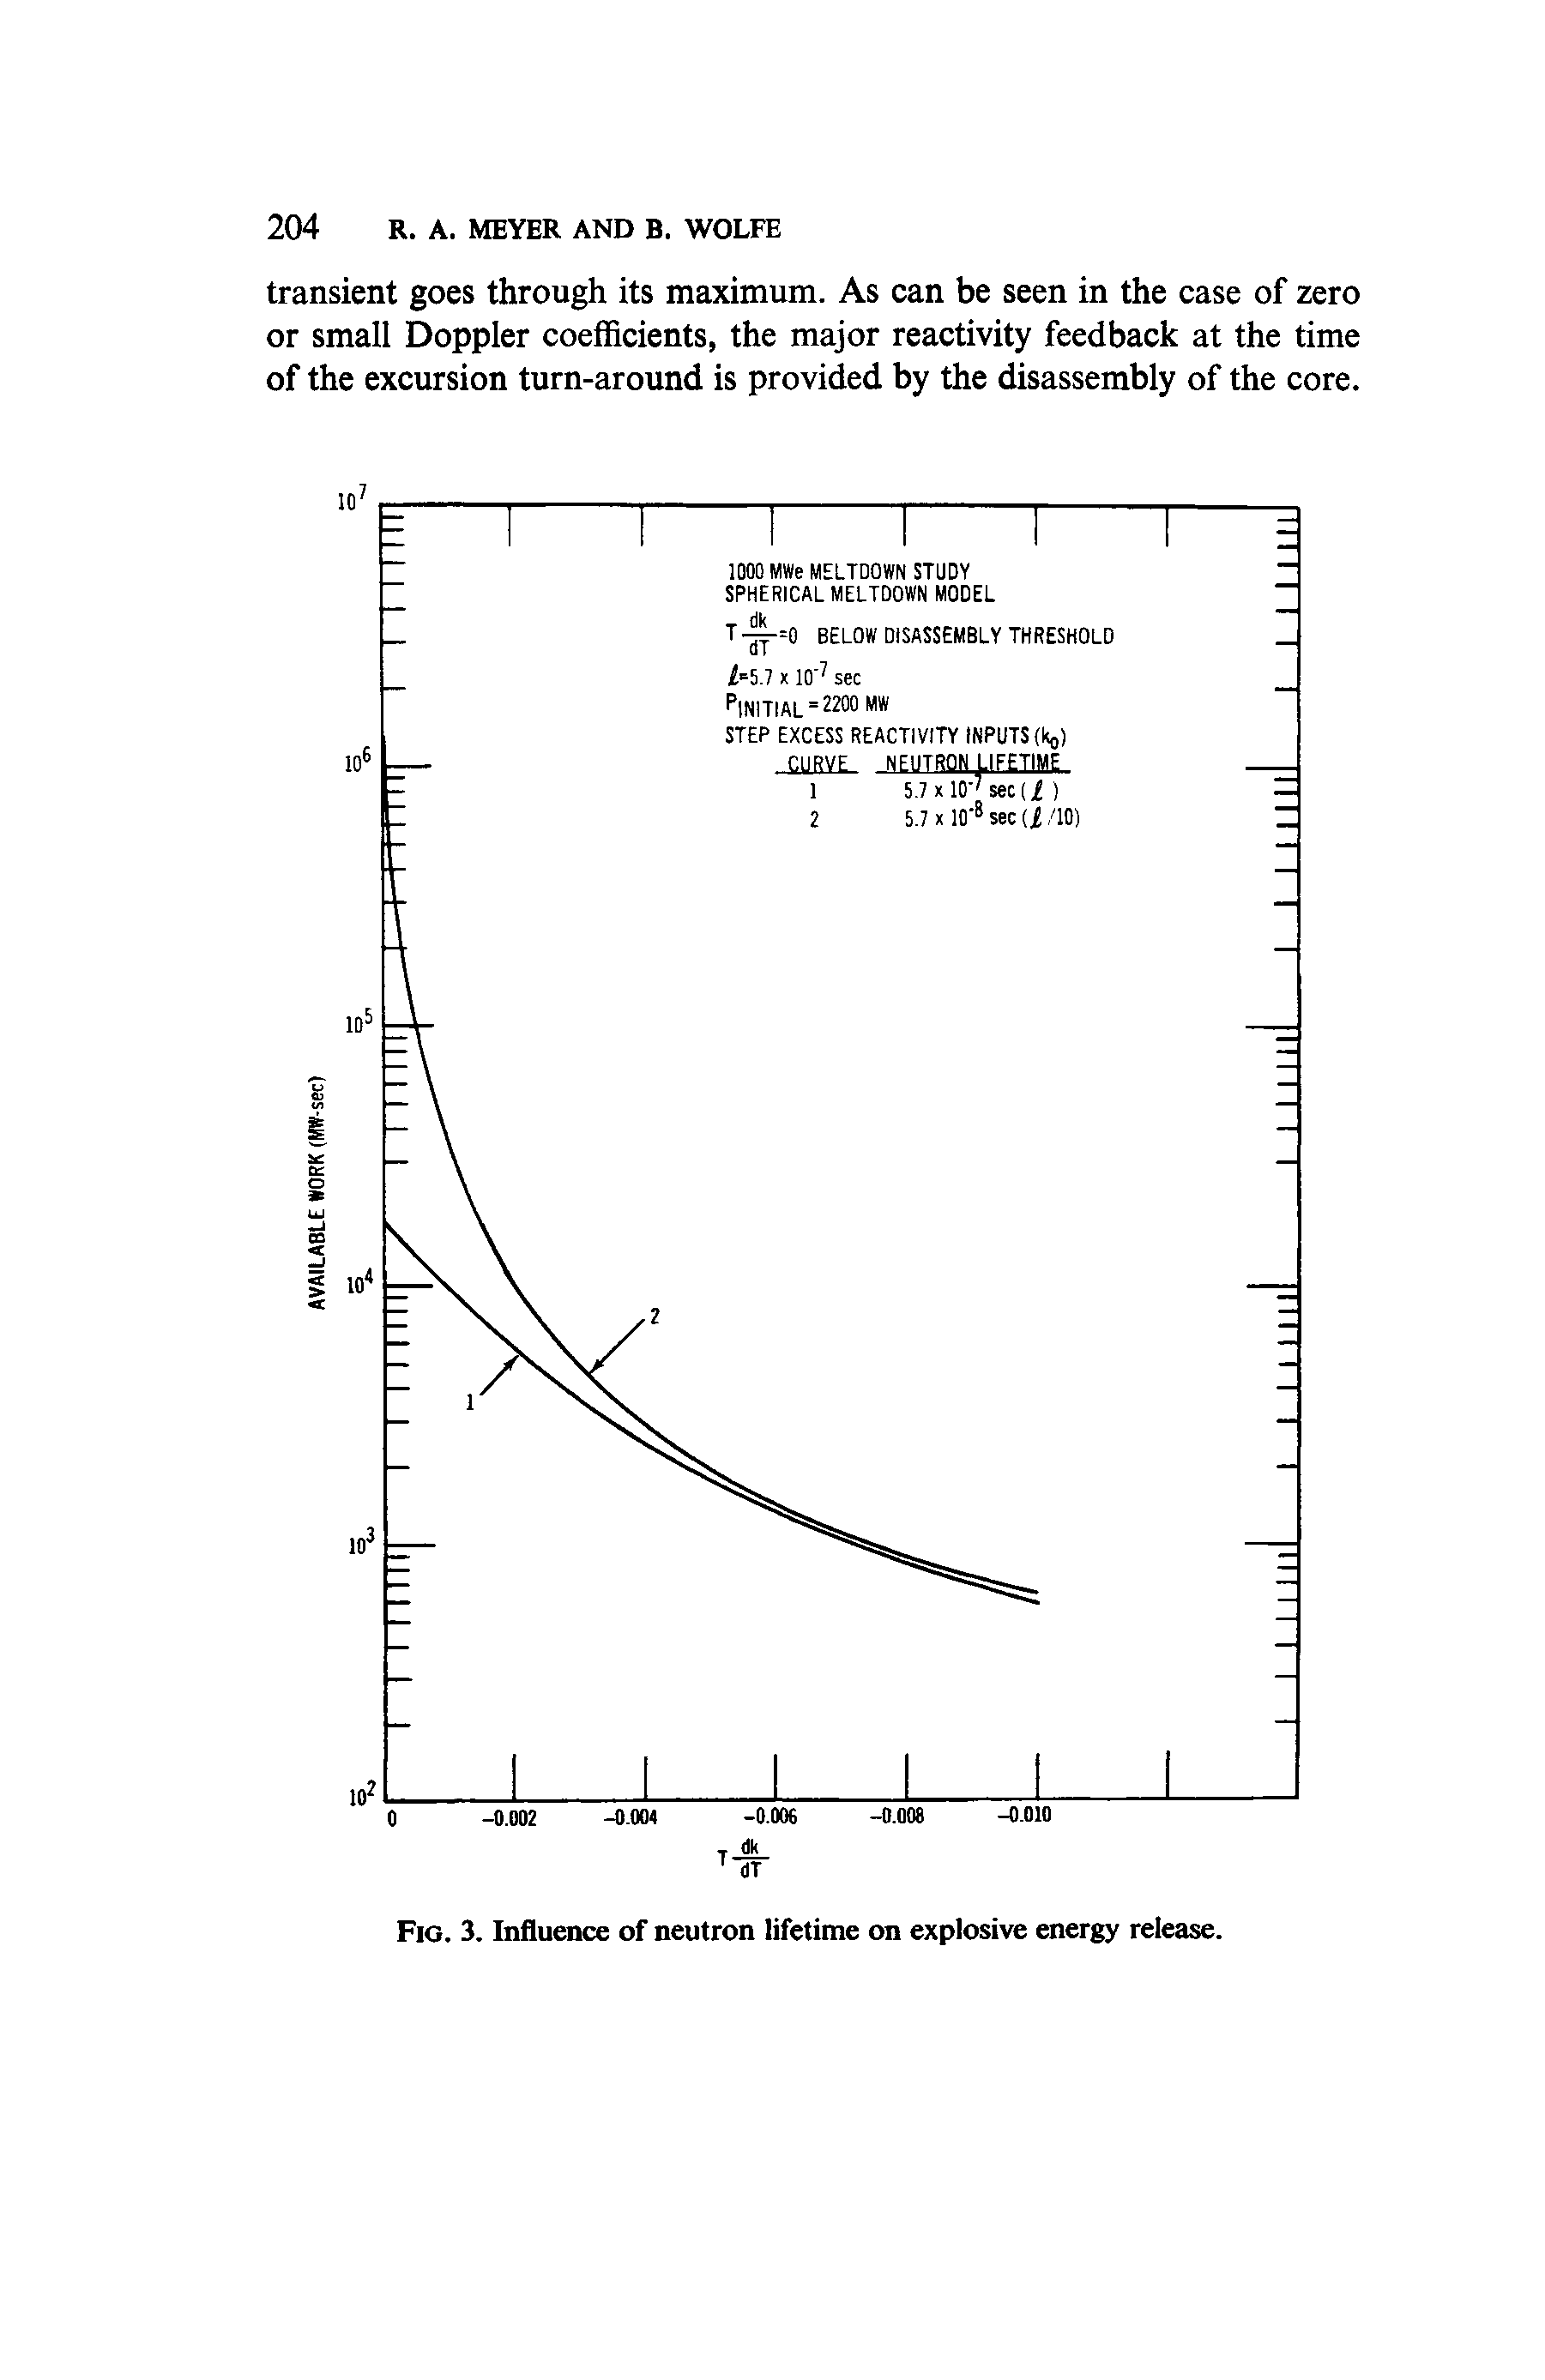 Fig. 3. Influence of neutron lifetime on explosive energy release.